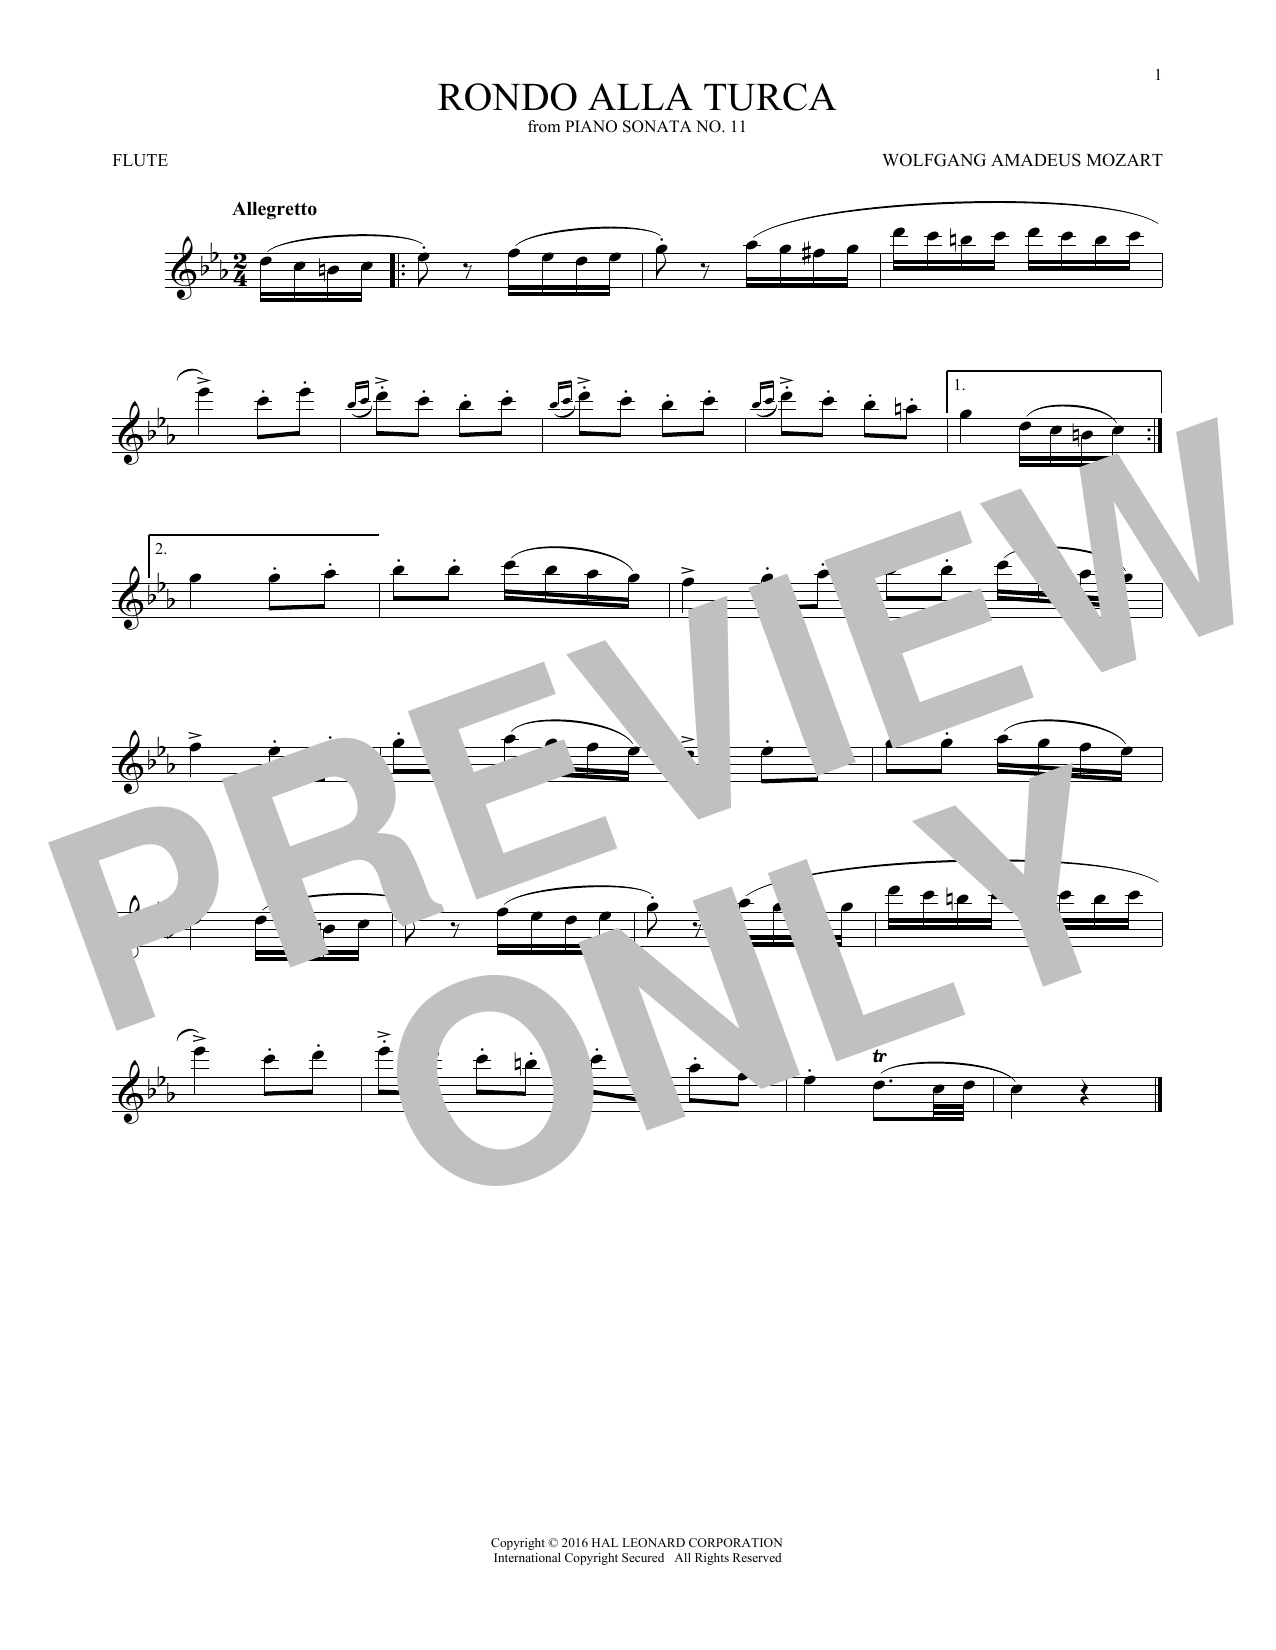 Wolfgang Amadeus Mozart Rondo Alla Turca Sheet Music Notes & Chords for Cello - Download or Print PDF